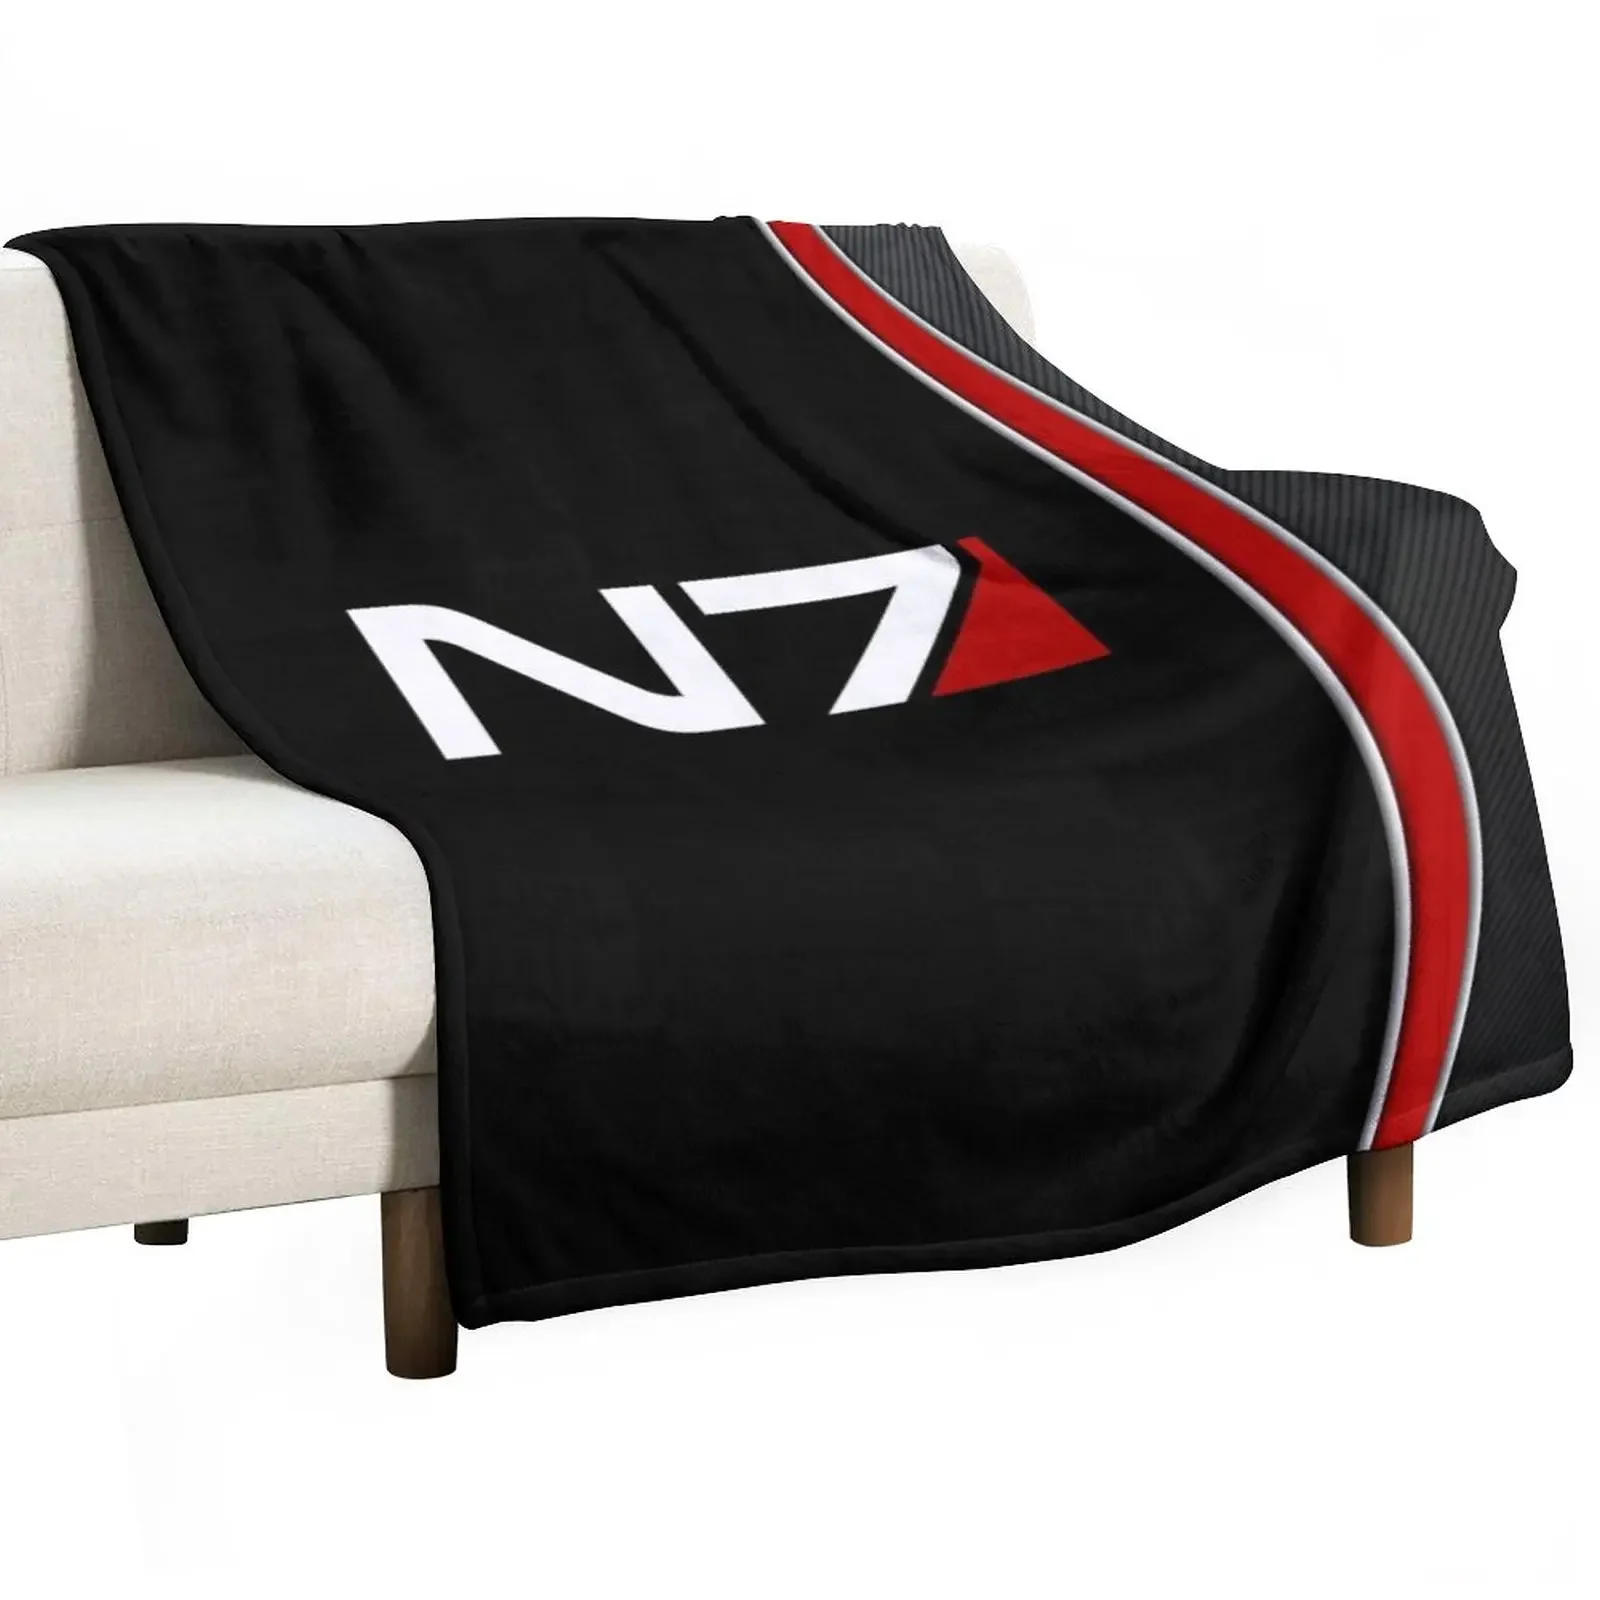 

N7 Mass effect emblem! Throw Blanket Soft Plaid Sofa Throw Weighted Blankets